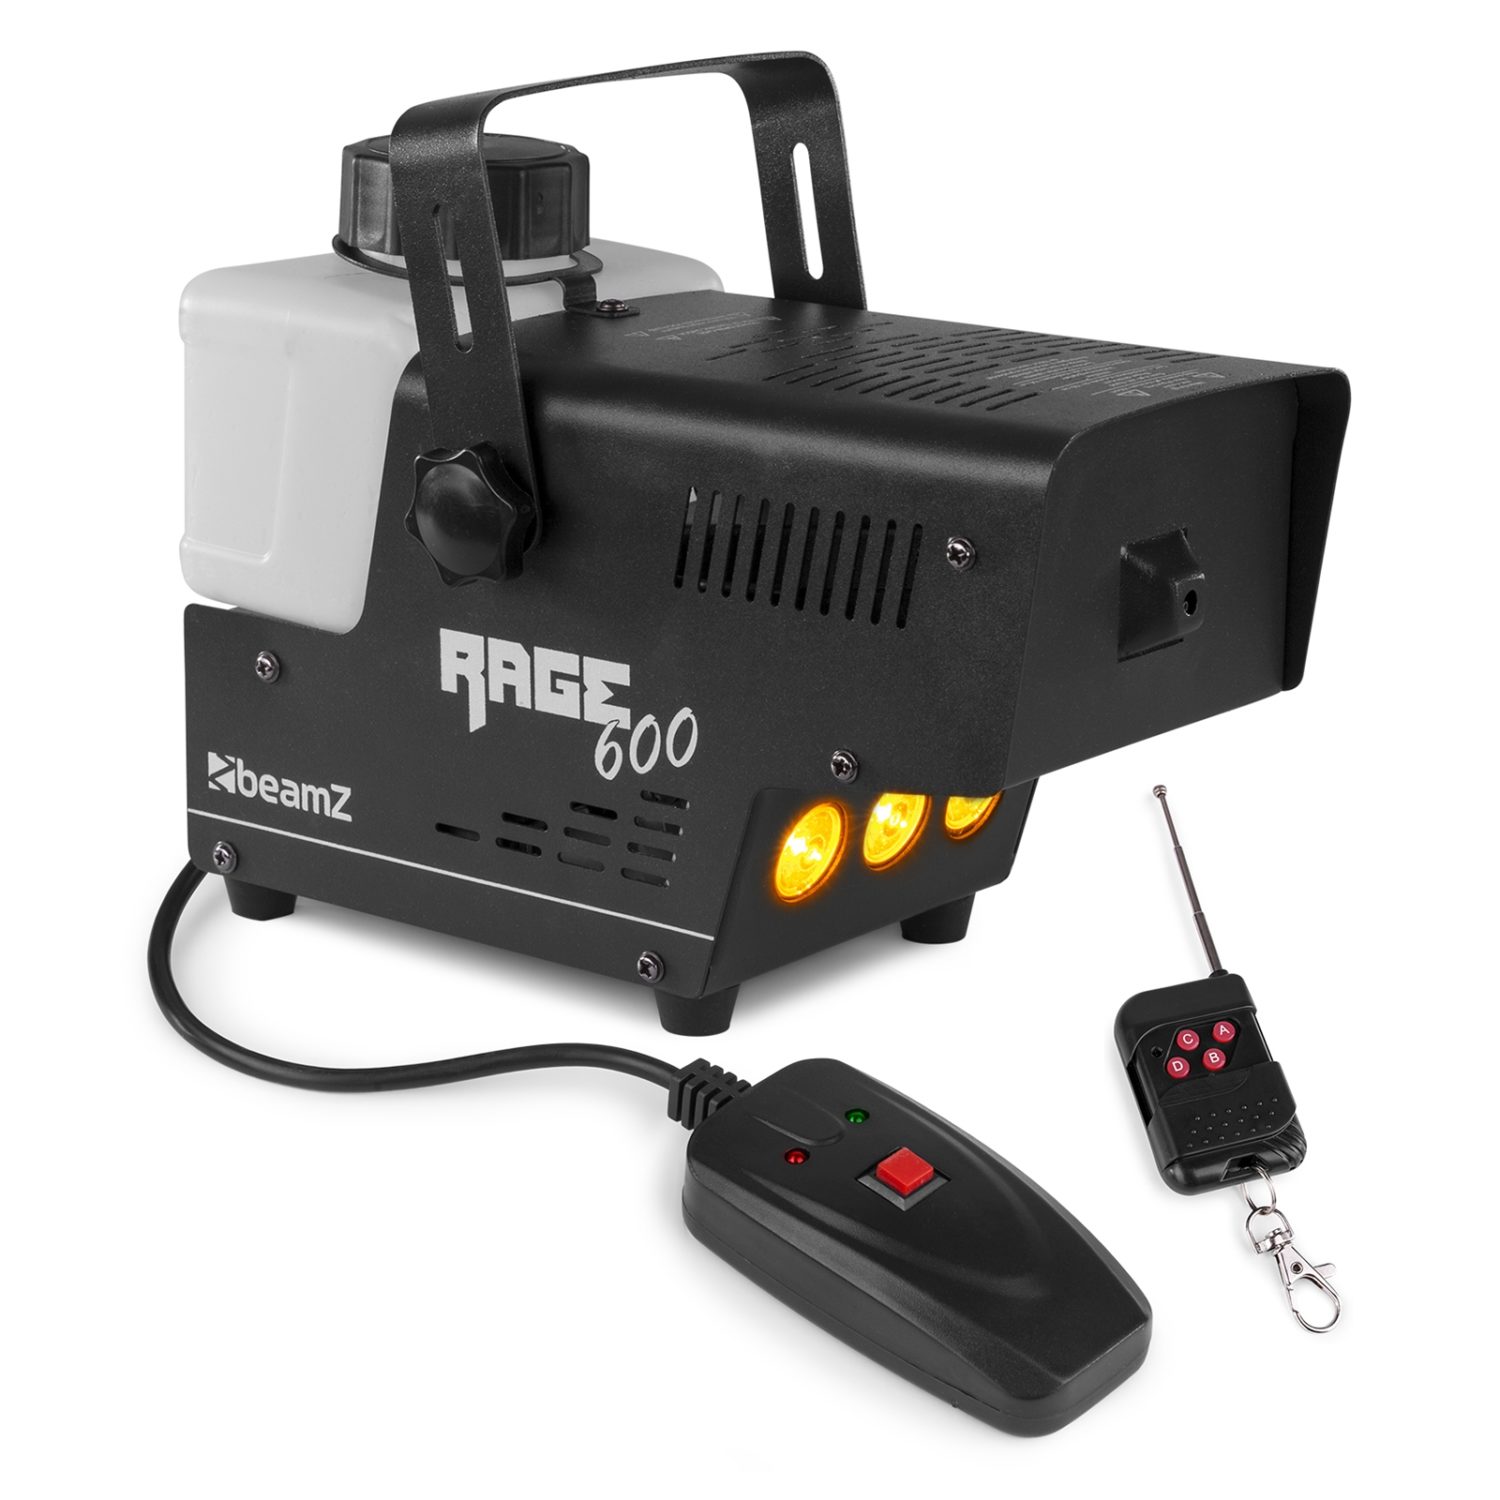 S1500 High Output Smoke Machine DMX Fogger DJ Fog Effect Party Haze Timer Remote 